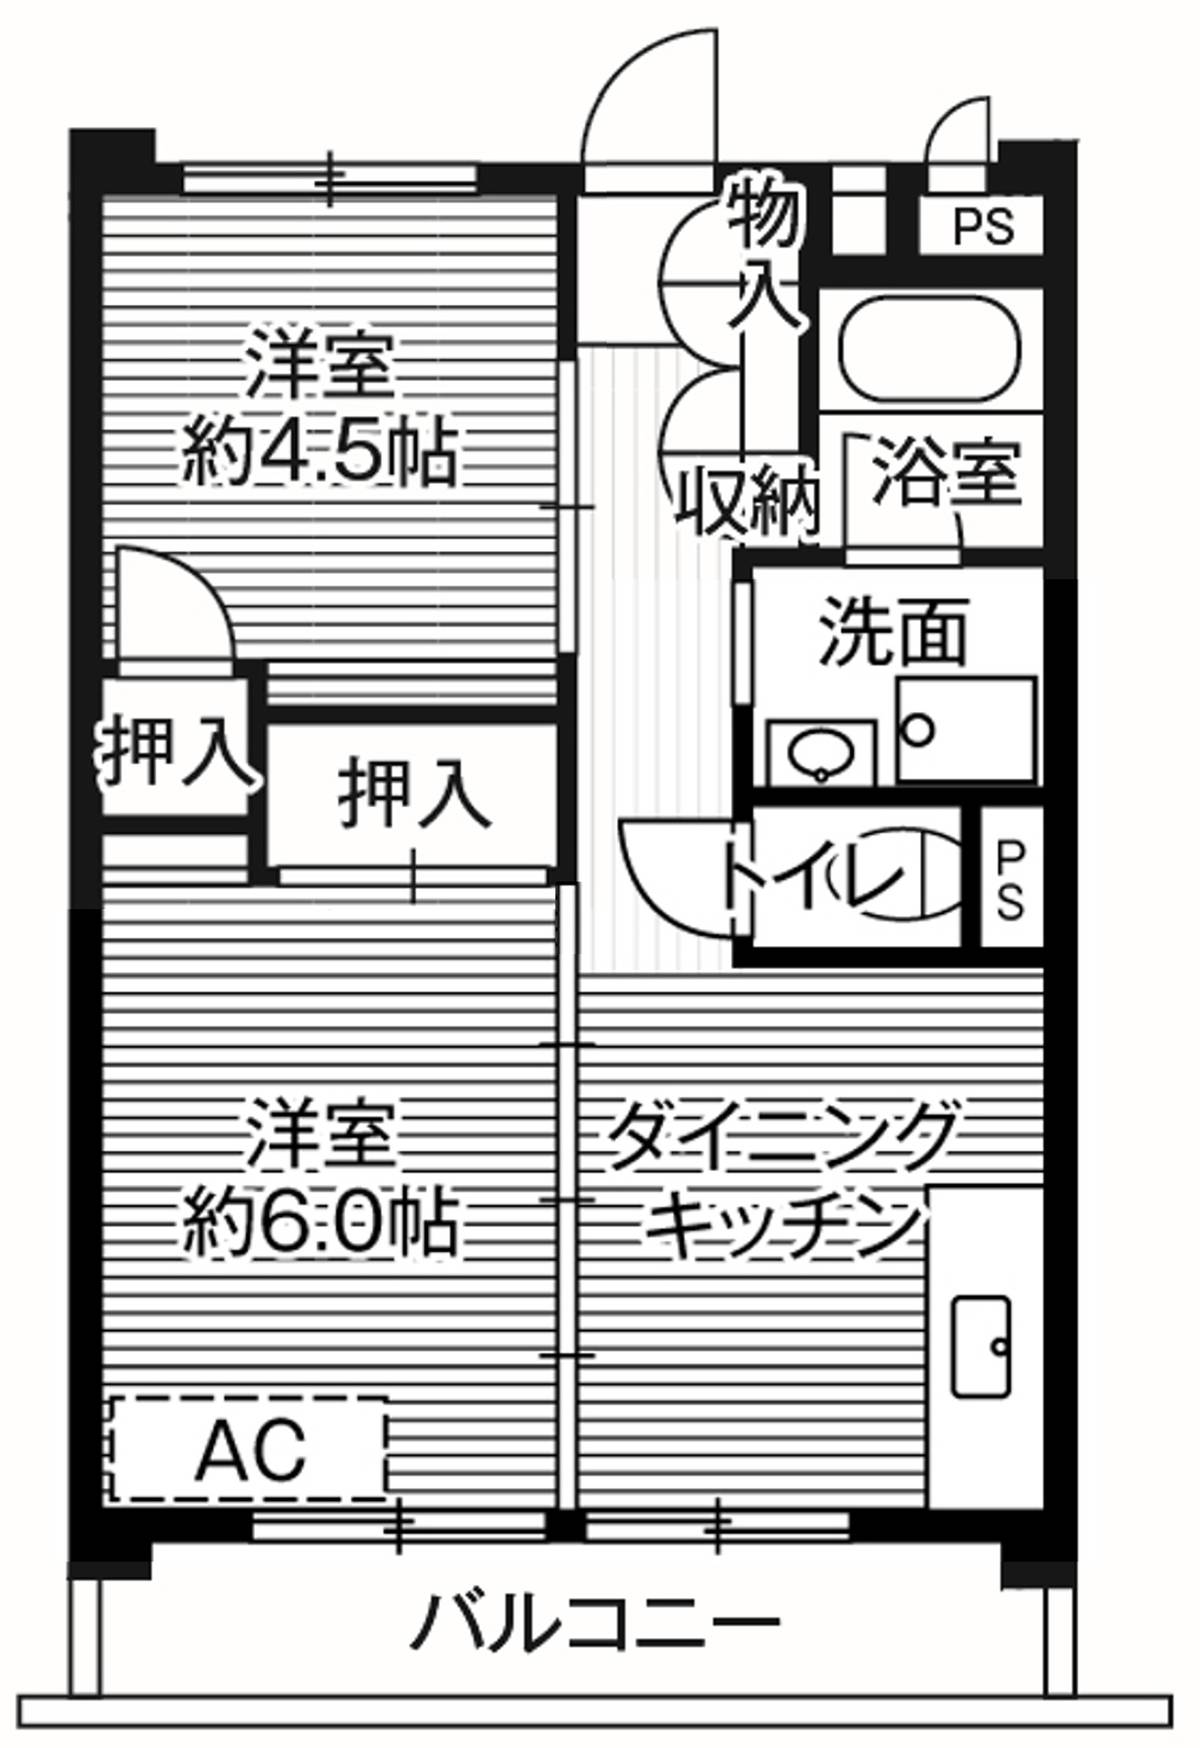 2DK floorplan of Village House Yanagisaki Tower in Kawaguchi-shi